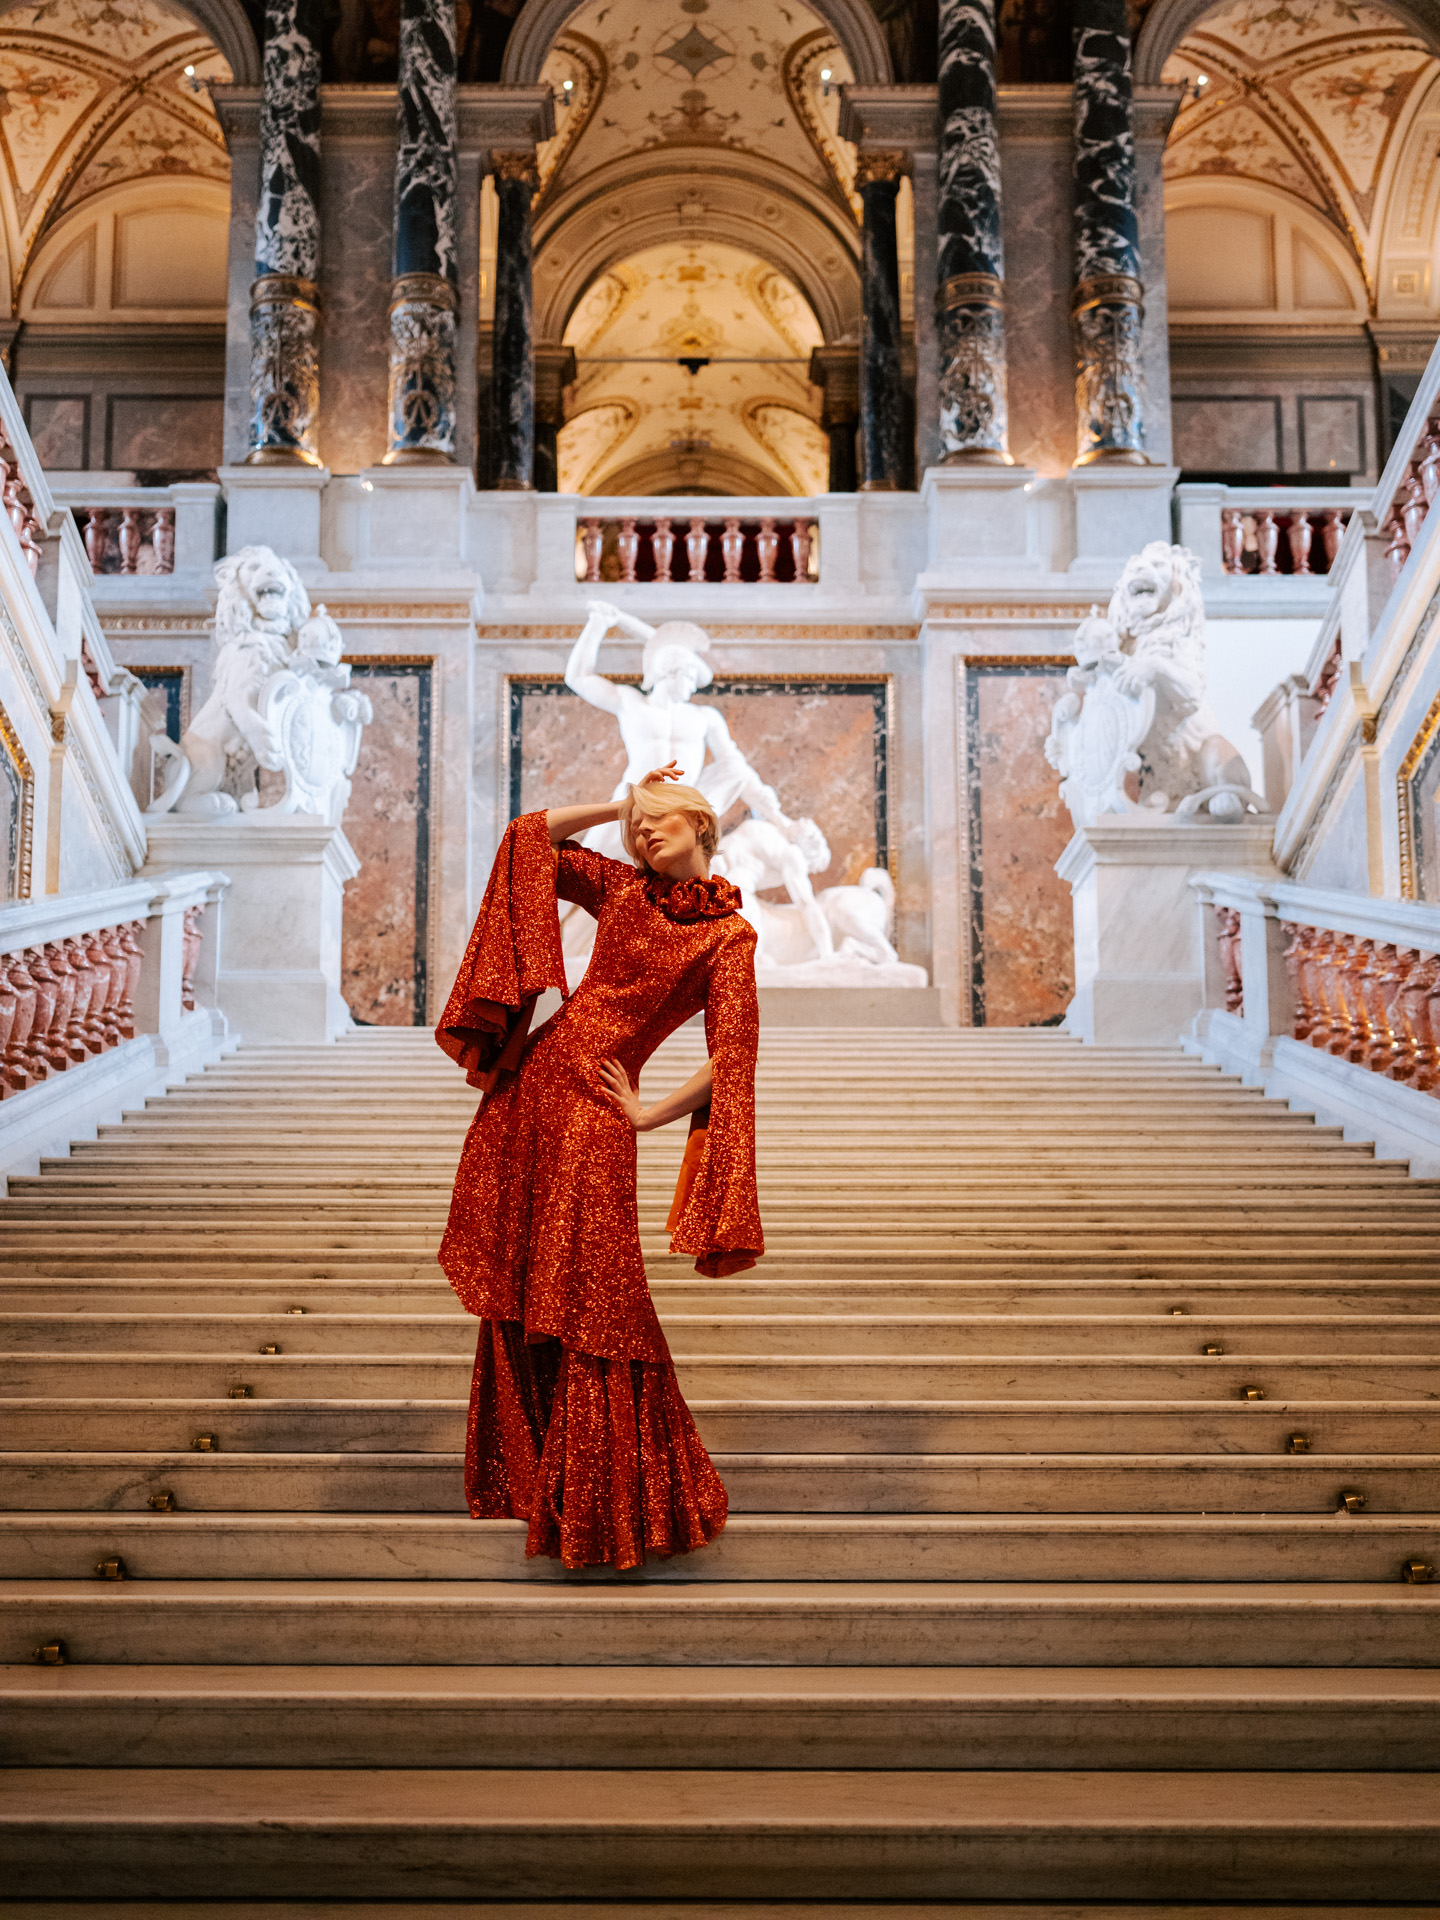 "Vienna – A luxurious journey." dress: Narbon, earrings: Swarovski, location: Kunsthistorisches Museum Vienna